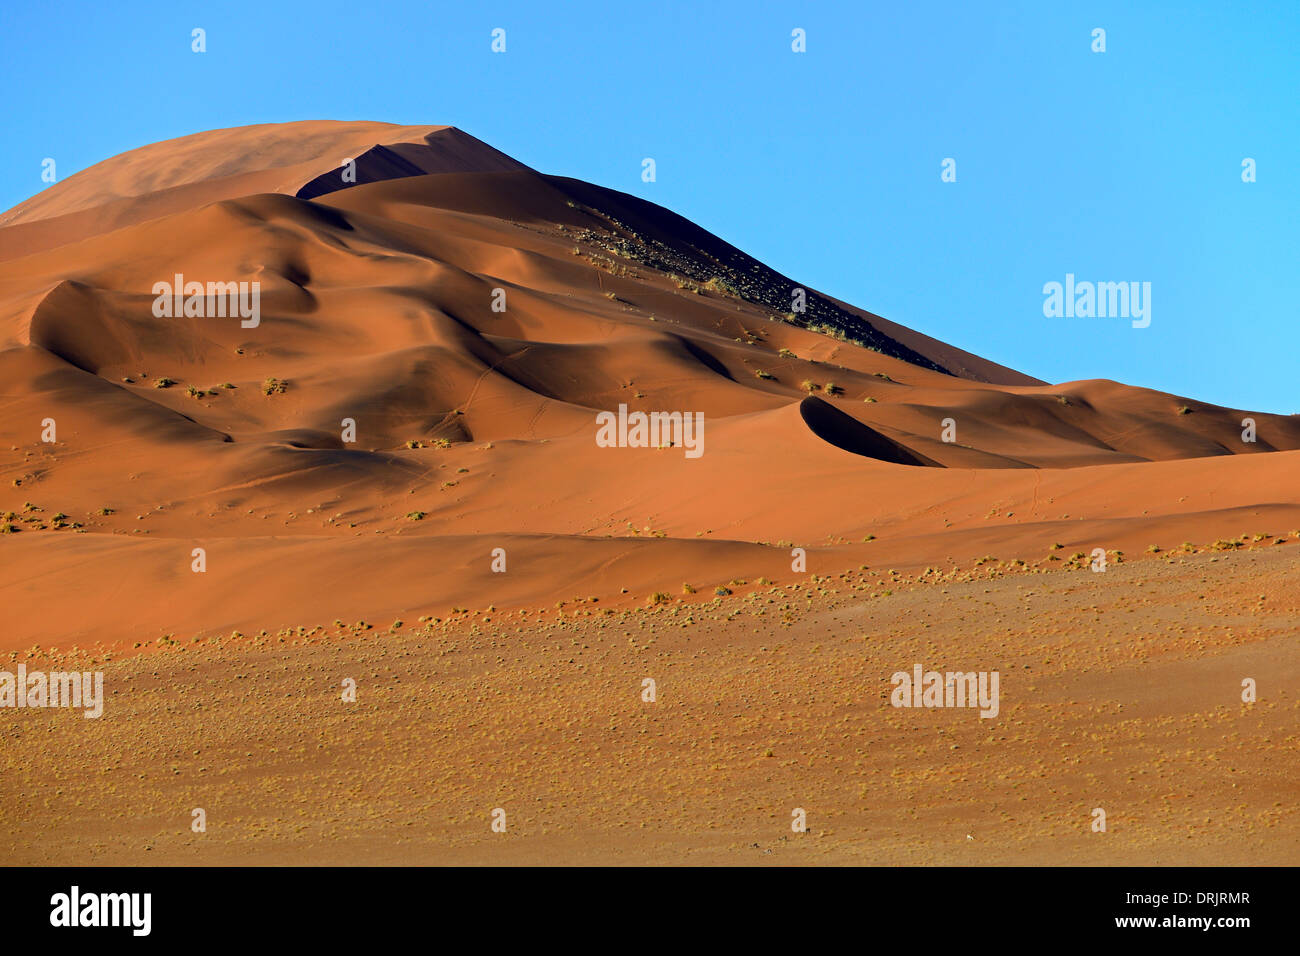 Le gigantesche dune di sabbia nella prima luce del mattino, Namib Naukluft national park, Sossusvlei, Namibia, Africa, riesige Sandduenen ho Foto Stock